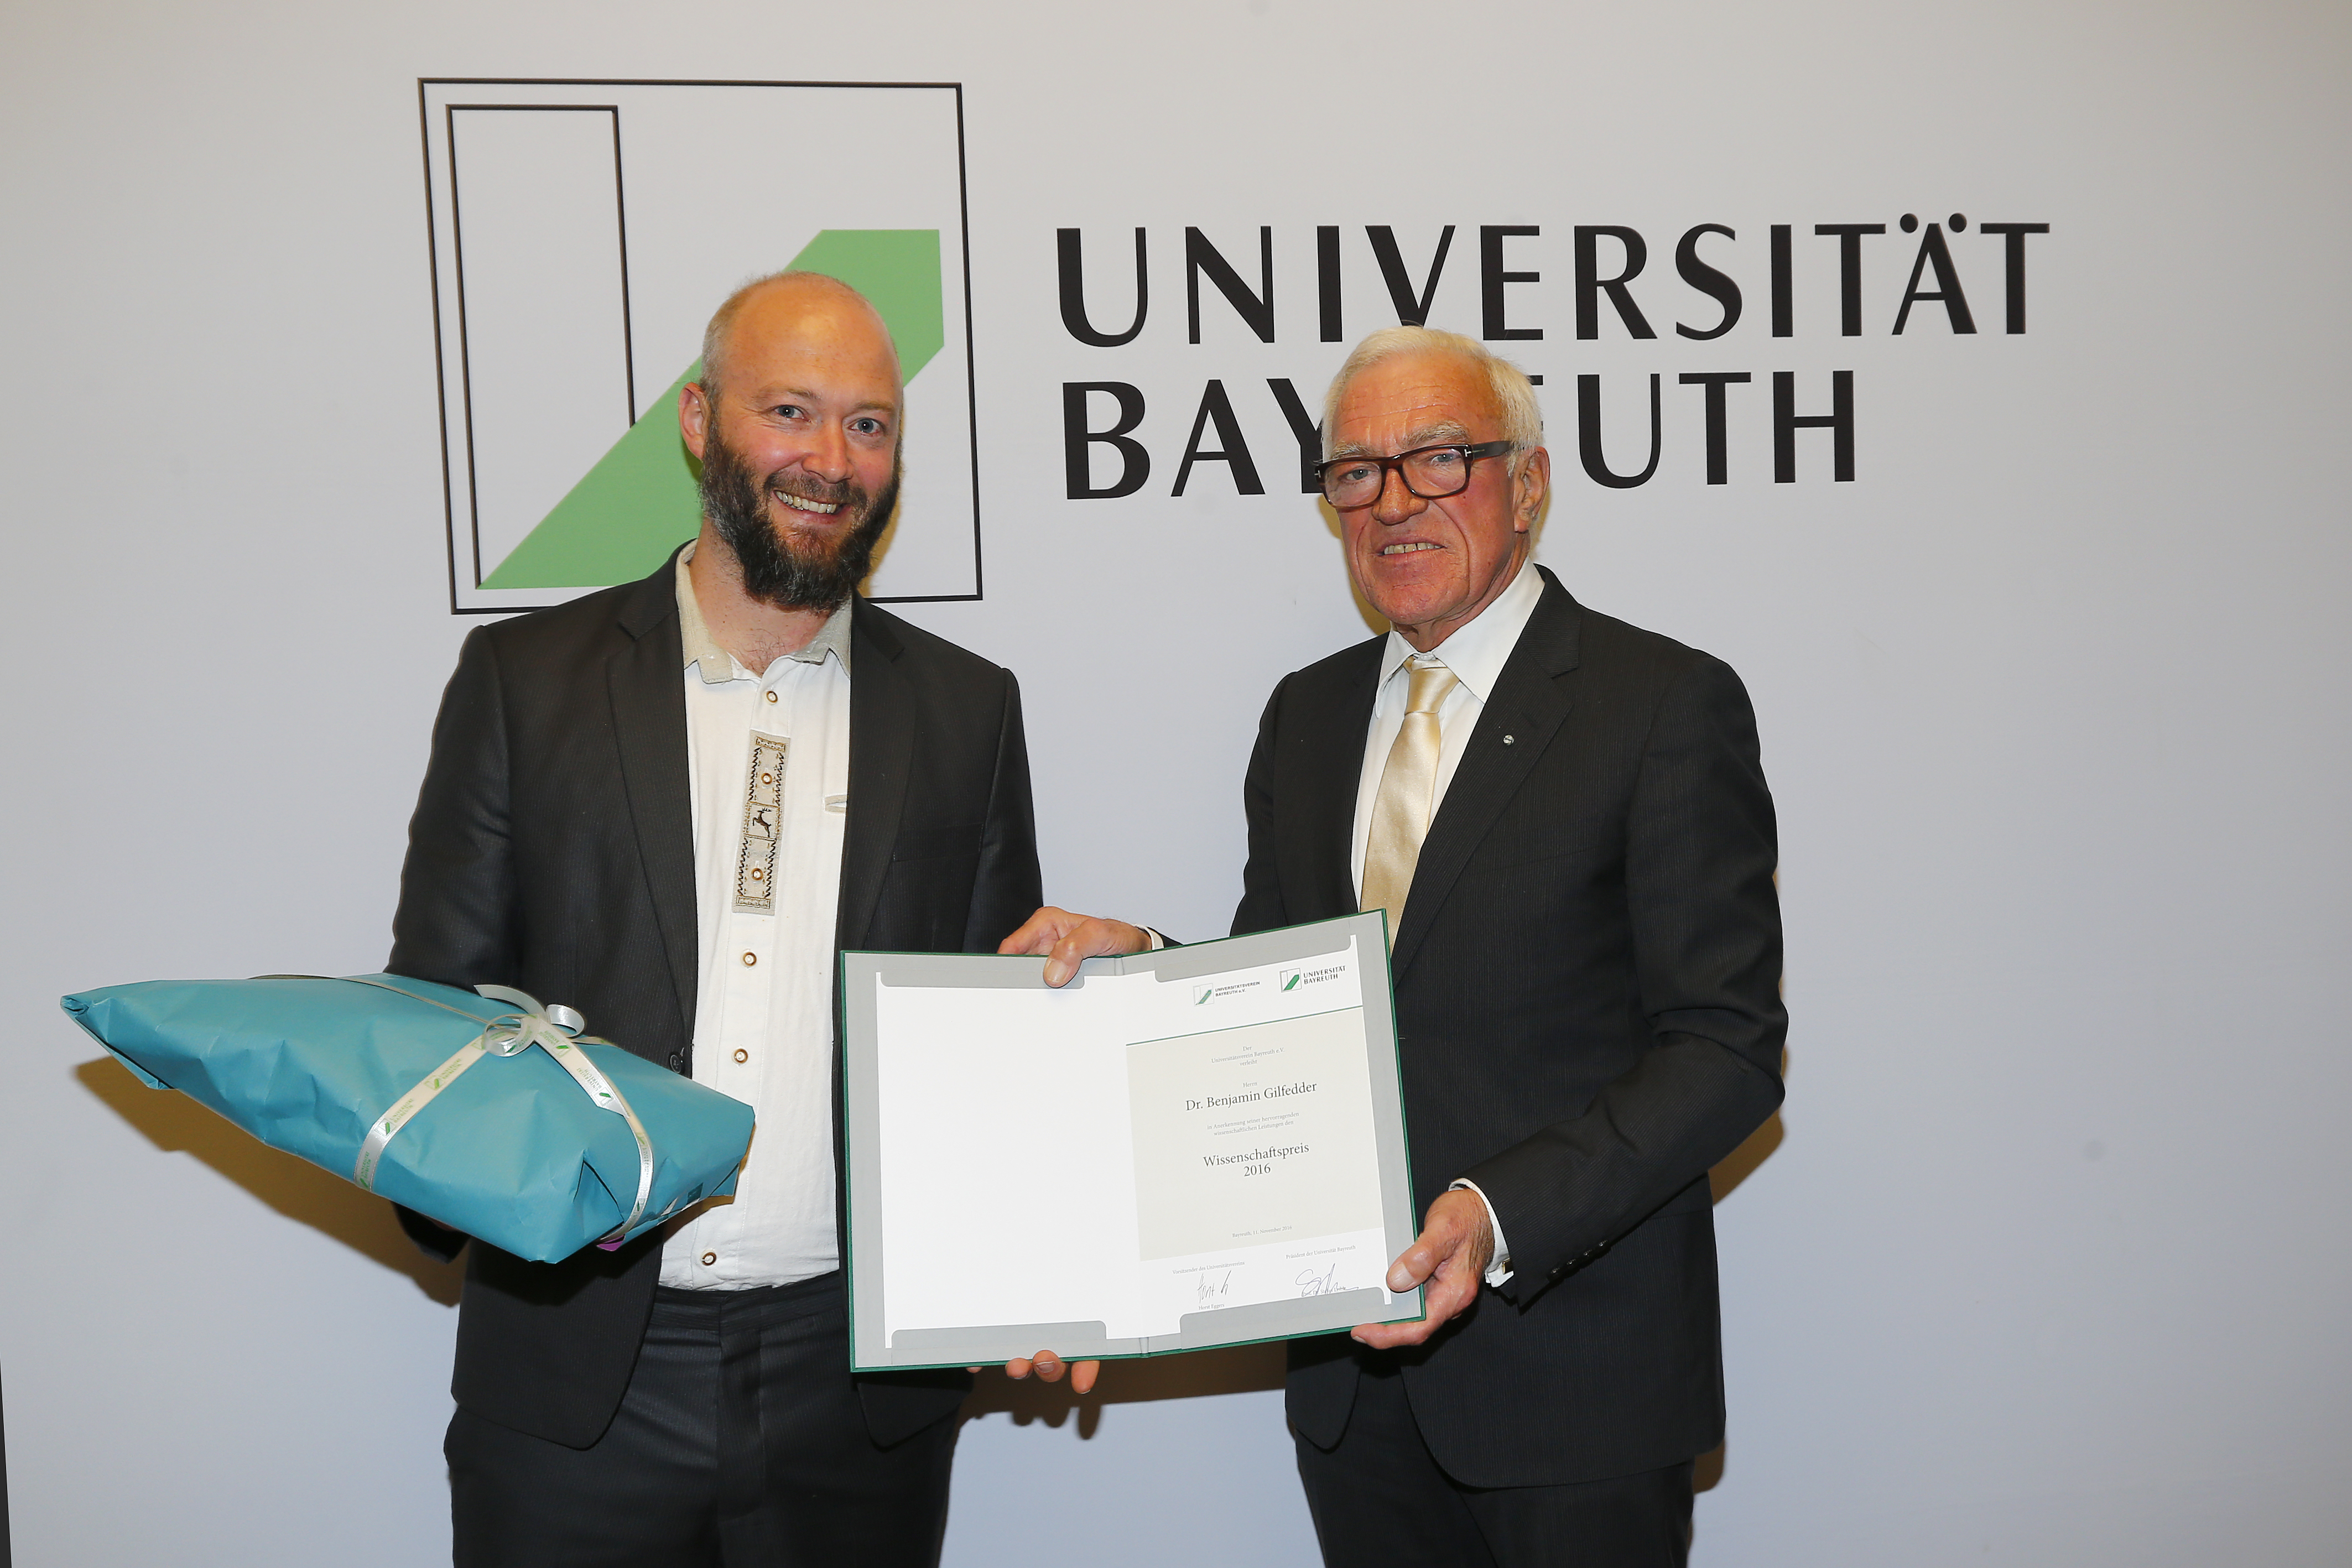 Verleihung des Wissenschaftspreises des Universitätsvereins Bayreuth e.V. an Dr. Benjamin Gilfedder durch Horst Eggers